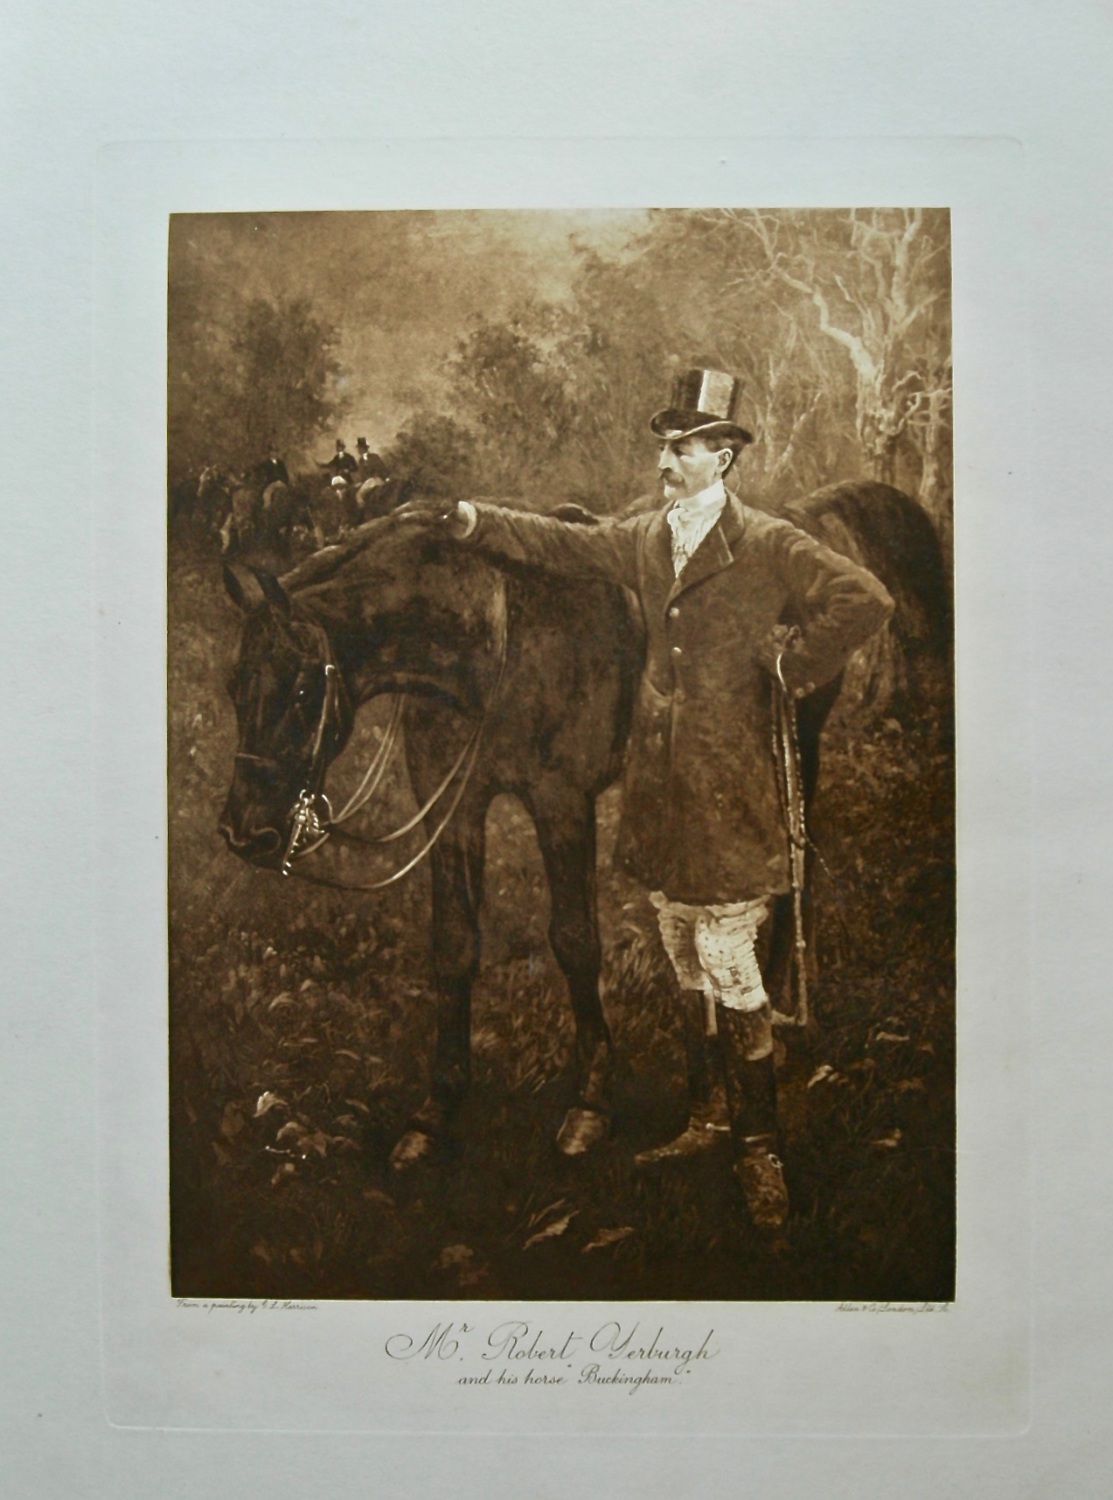 Mr. Robert Yerburgh and his horse 